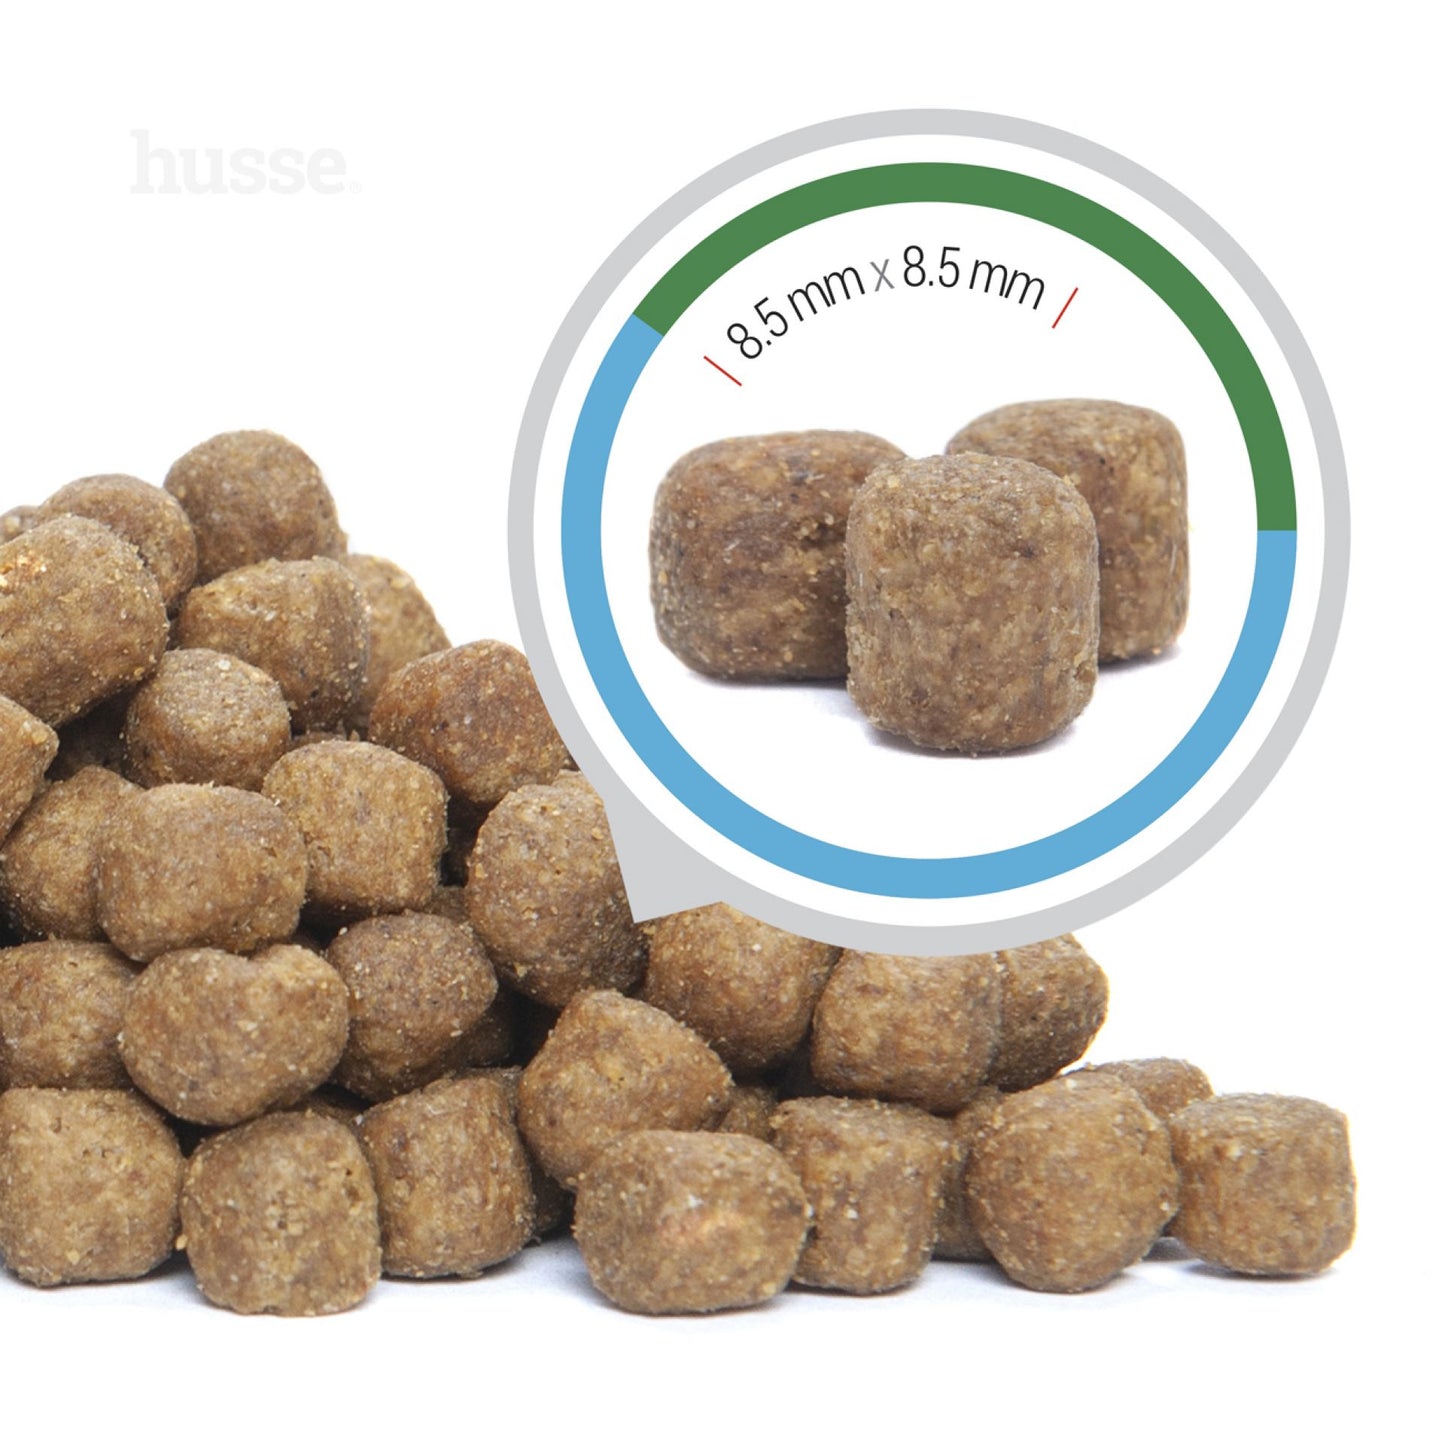 Optimal Mini | Gluten free dog dry food designed to meet high energy needs